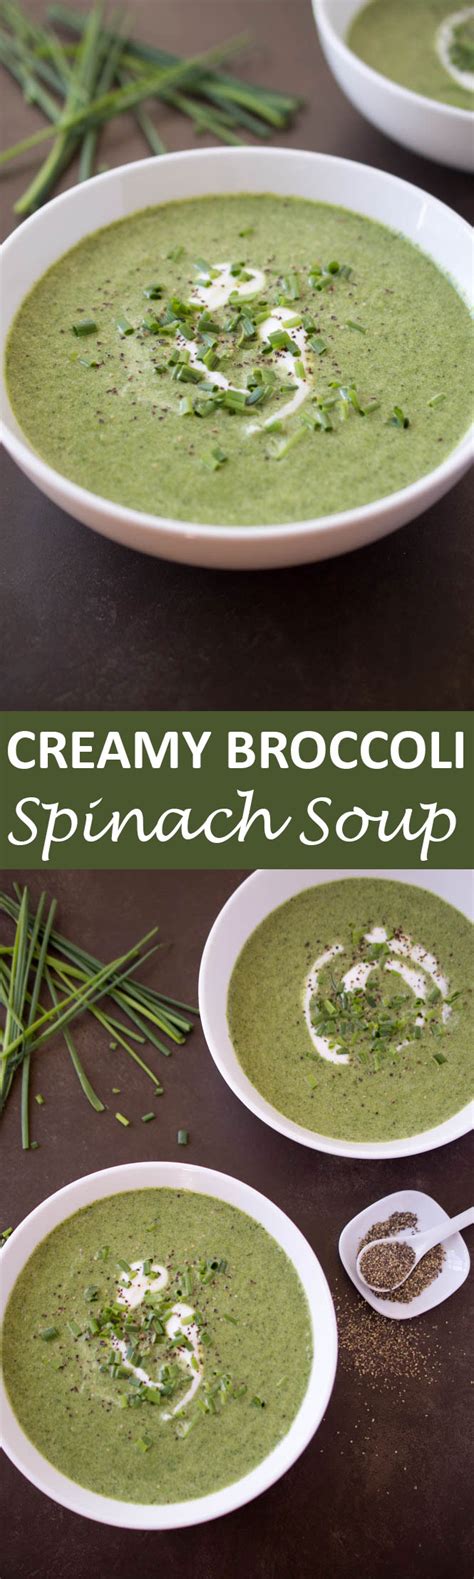 Creamy Broccoli Spinach Soup With Greek Yogurt Recipe Spinach